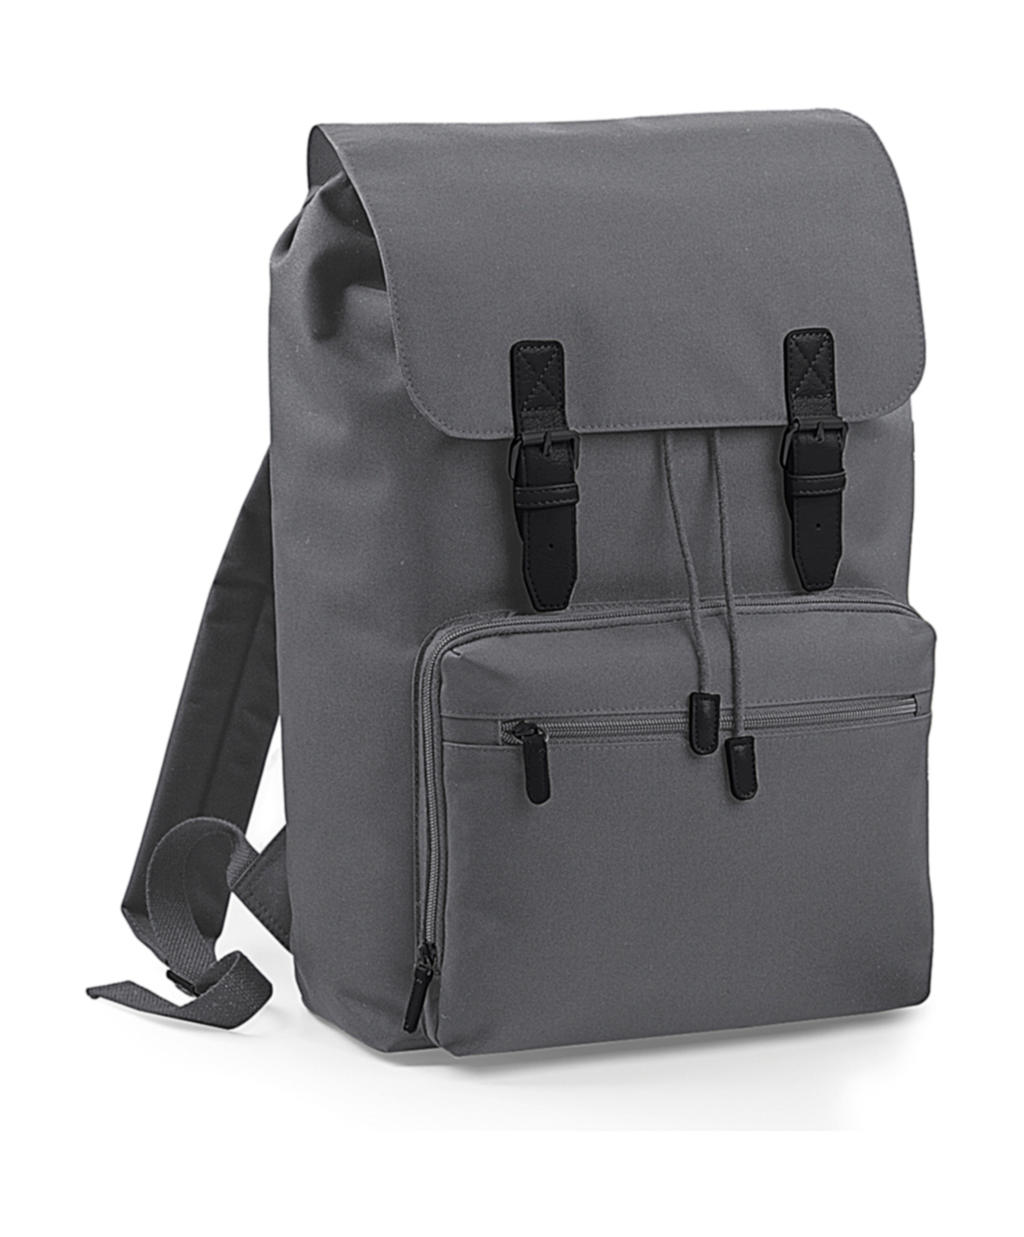  Vintage Laptop Backpack in Farbe Graphite Grey/Black